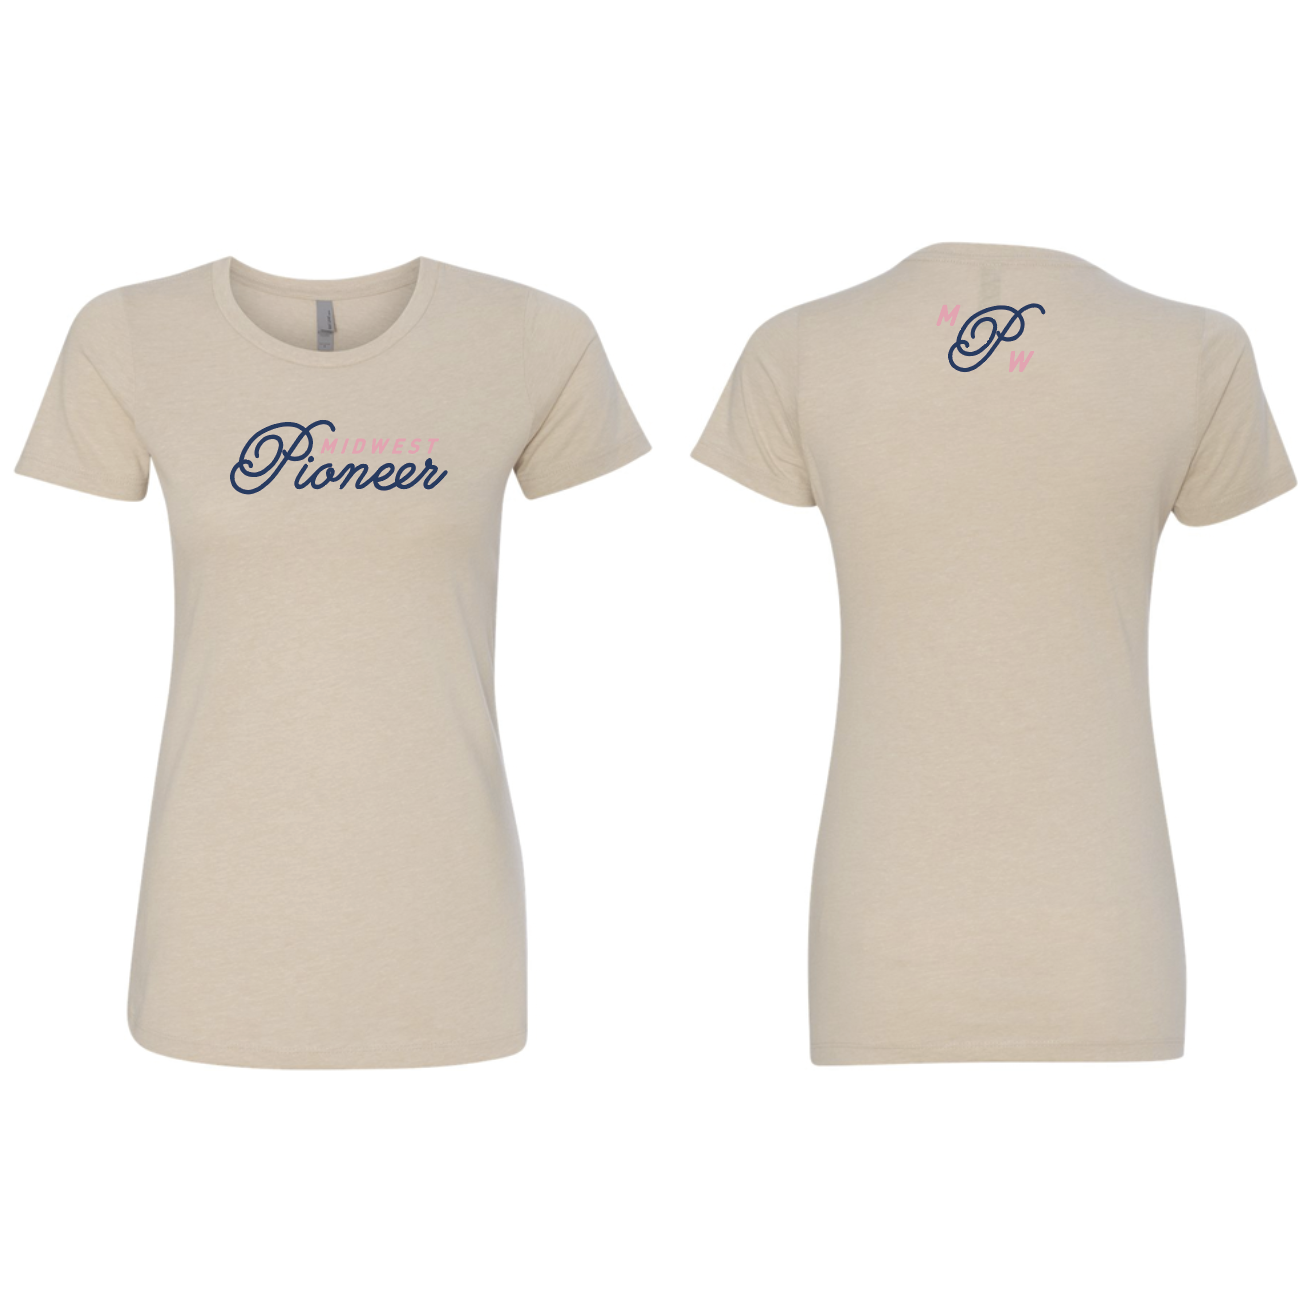 Pioneer Midwest Retro T-Shirt Women's